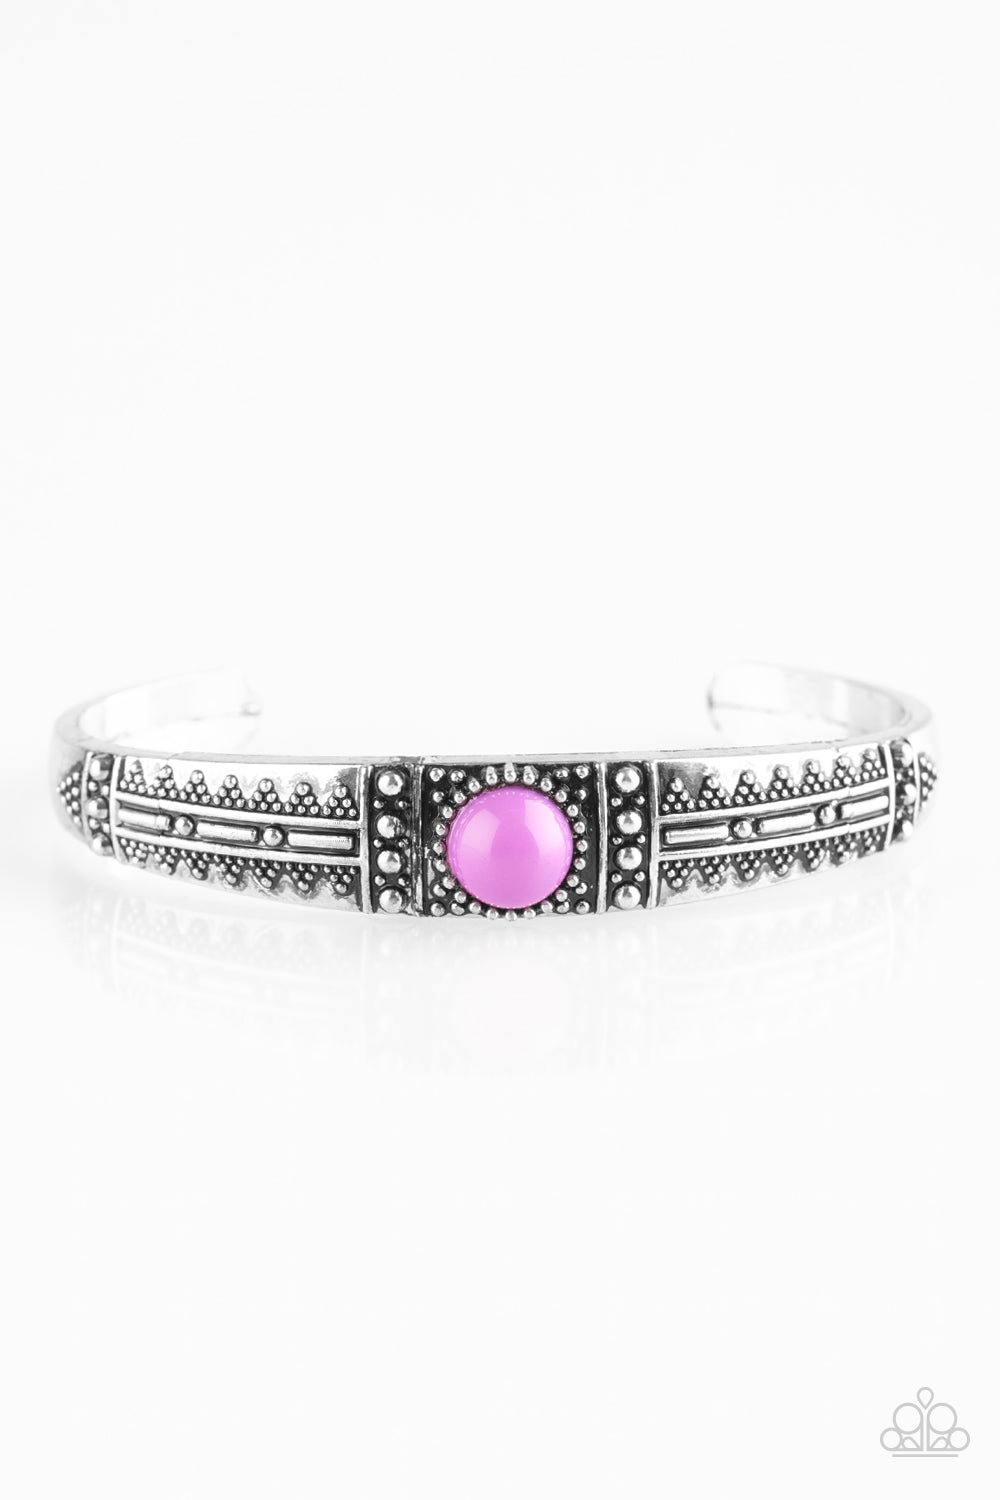 Paparazzi Singing Sahara - Purple Bead - Silver Cuff Bracelet - $5 Jewelry With Ashley Swint